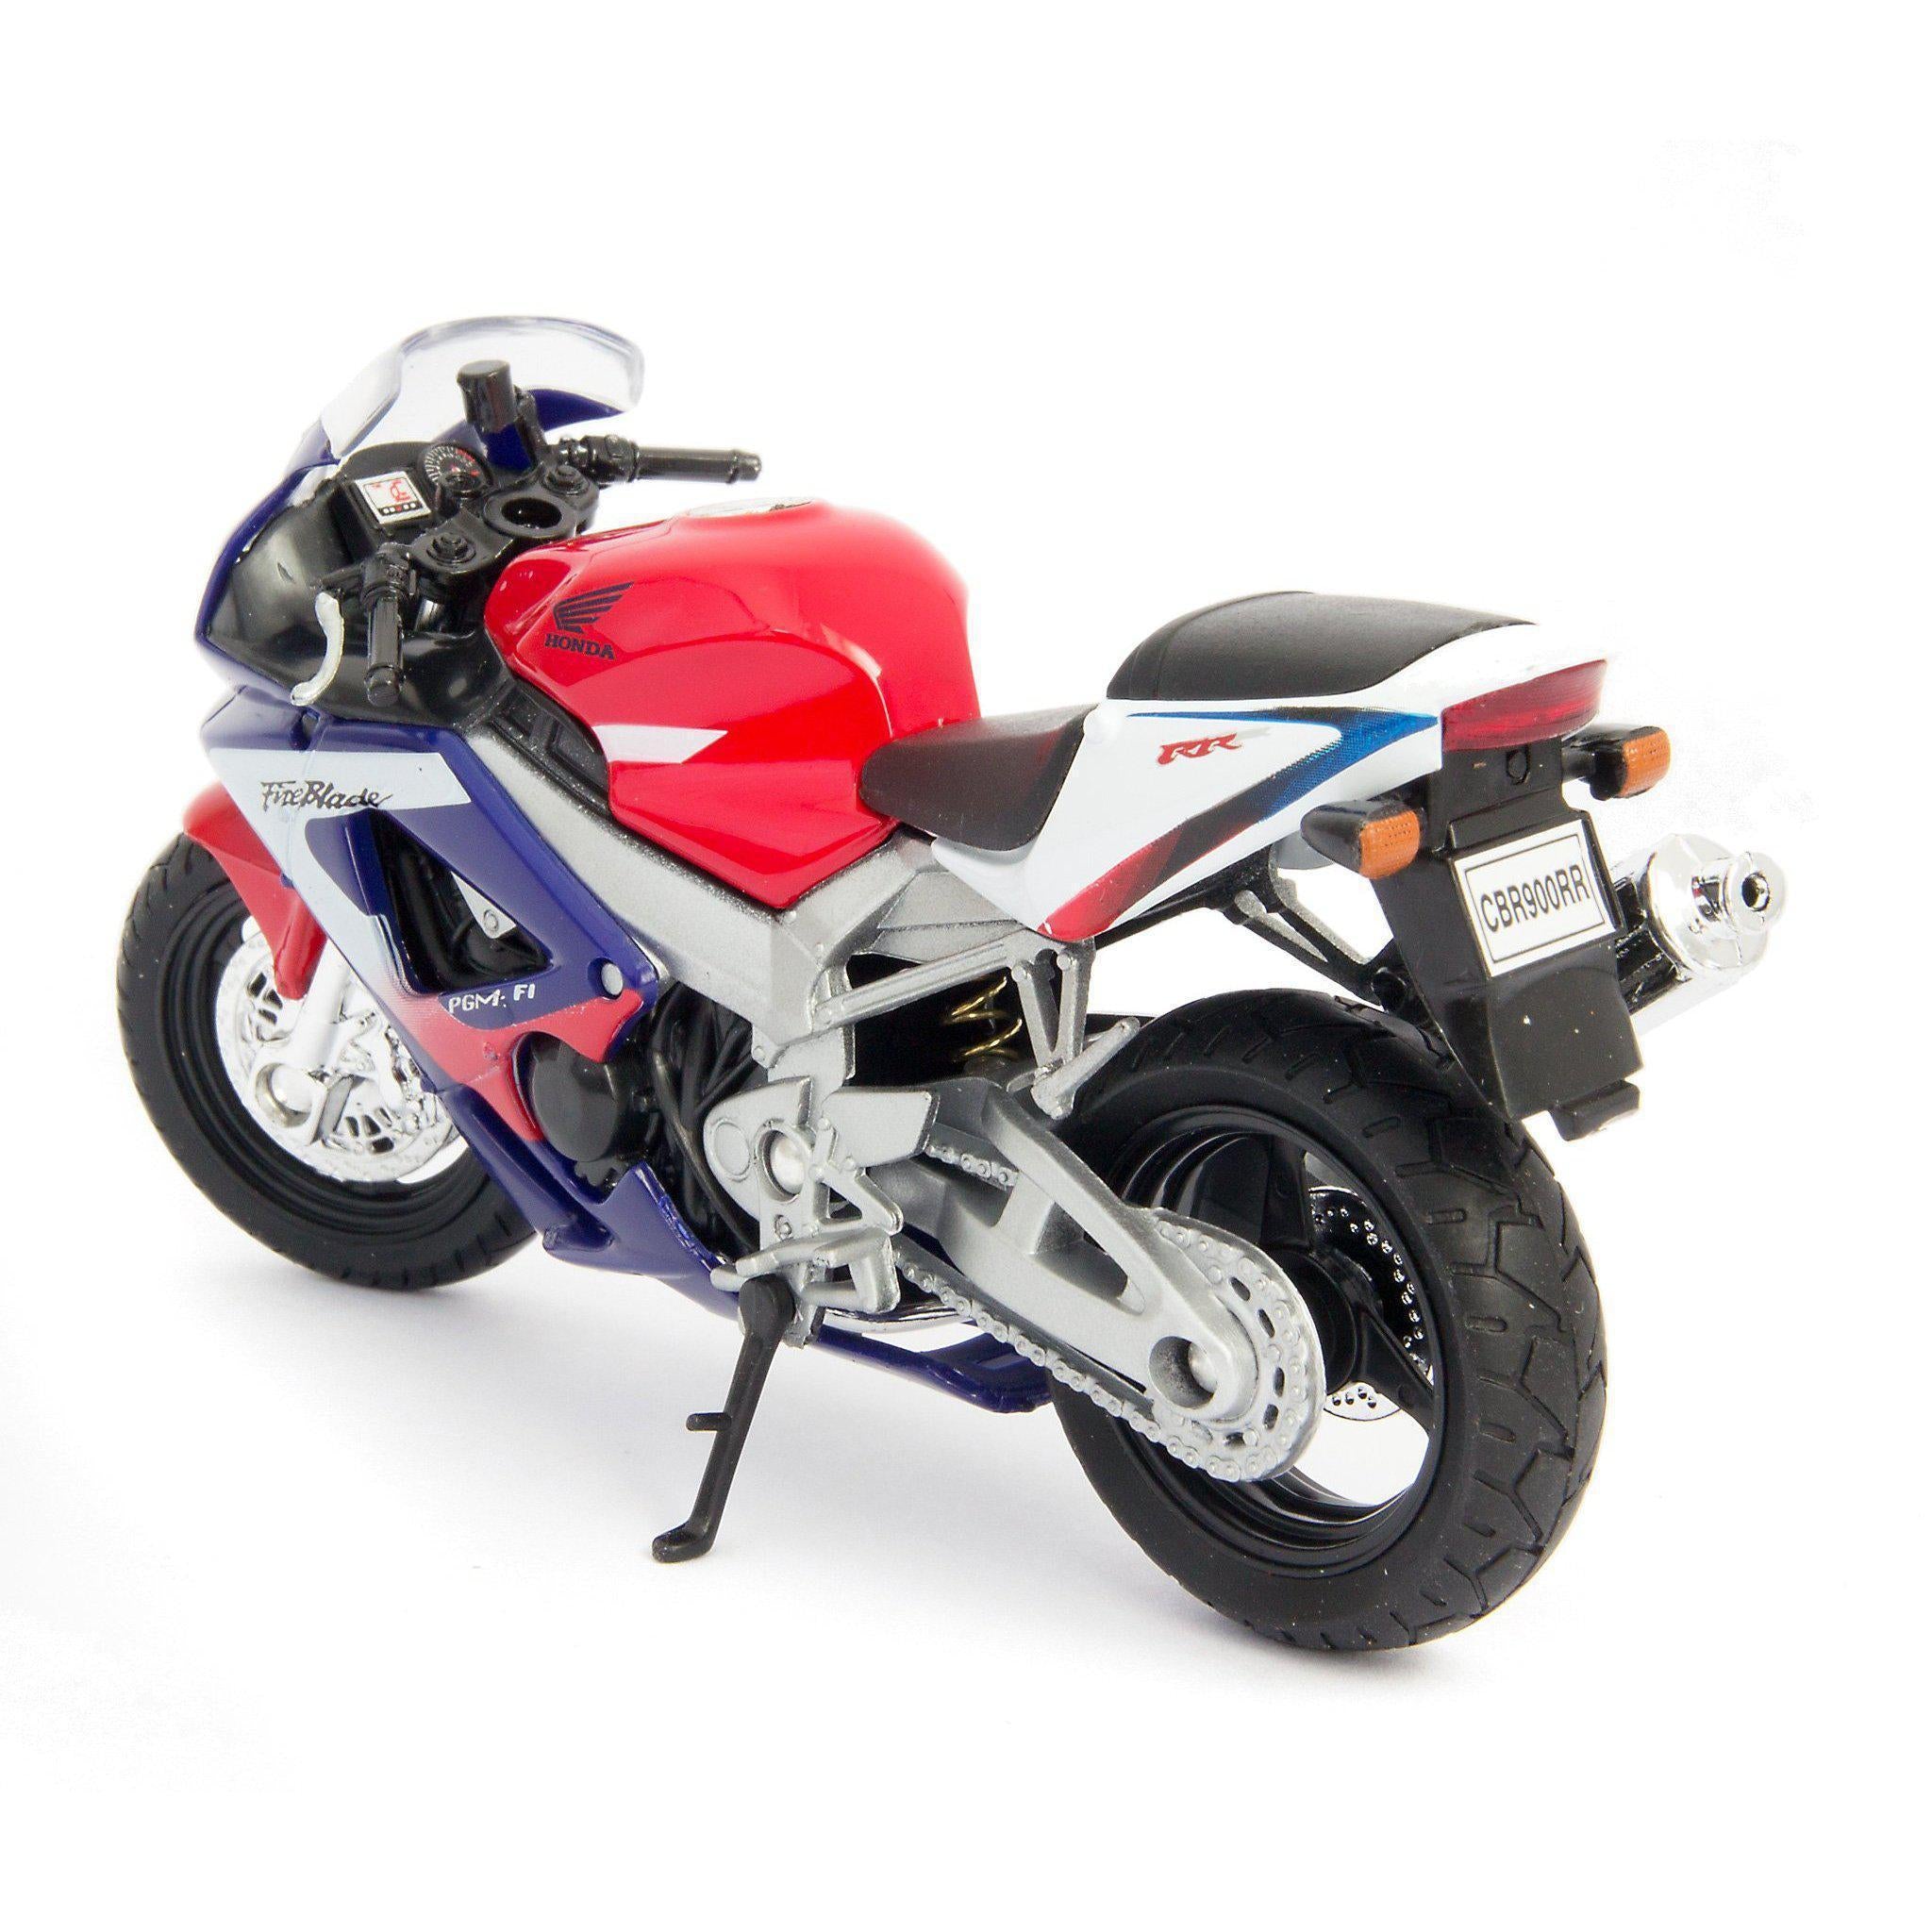 Honda CBR900RR Fireblade Diecast Model Motorcycle - 1:18 Scale-Welly-Diecast Model Centre